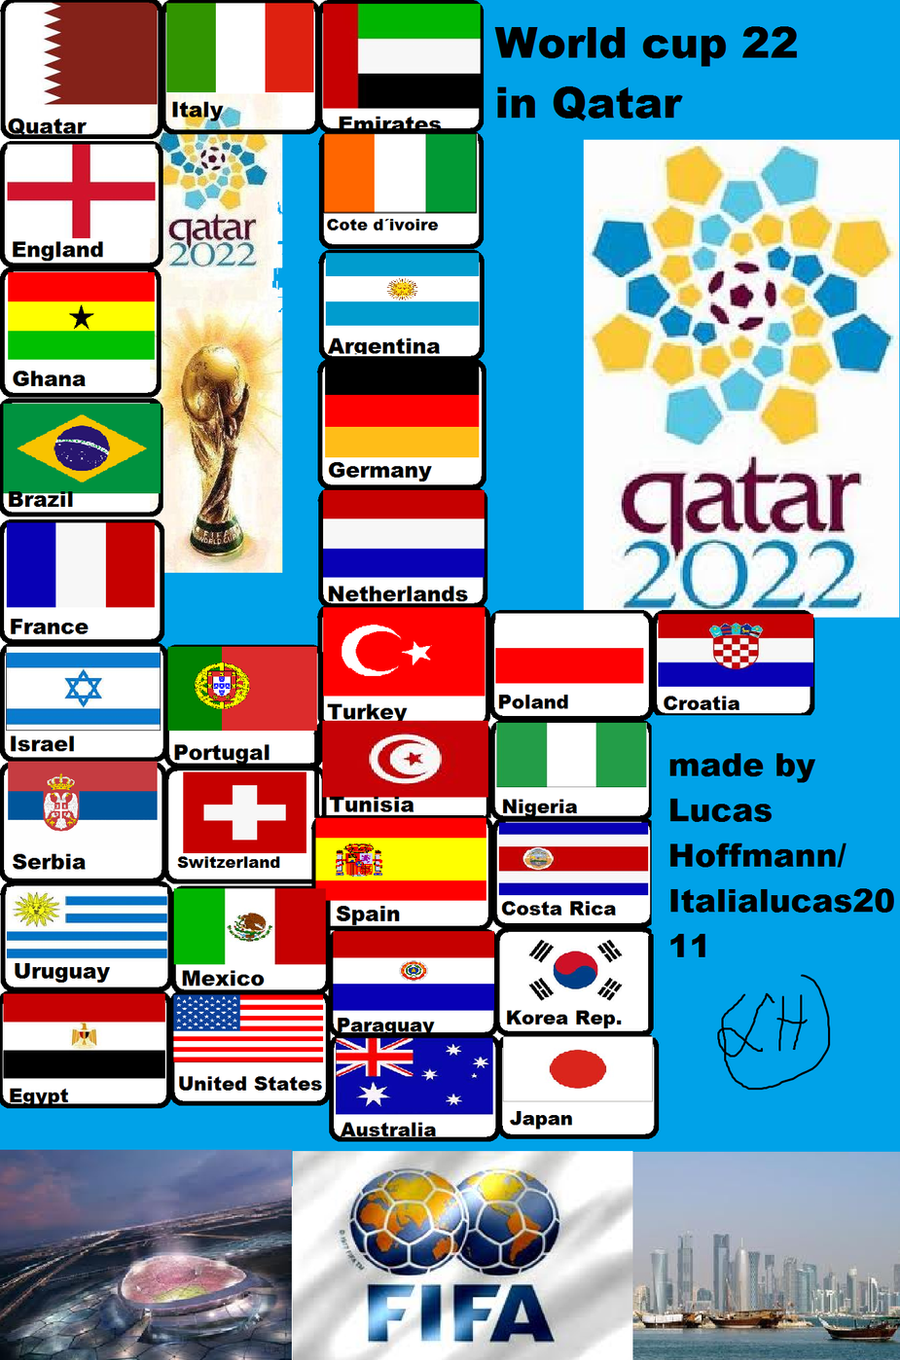 World Cup 2022 in Qatar by italialucas2011 on DeviantArt